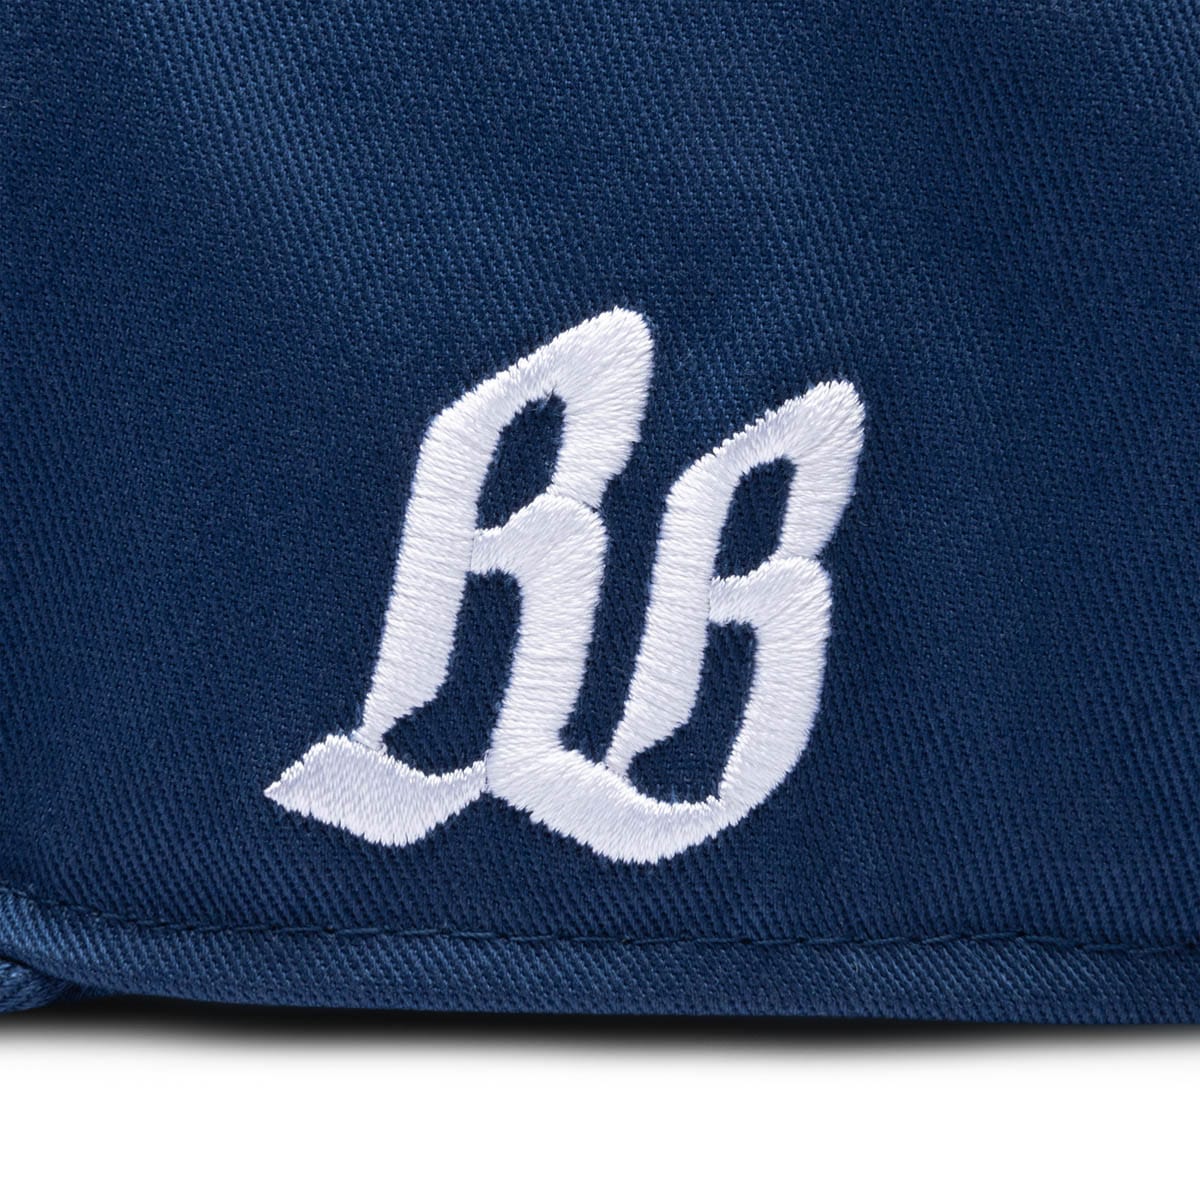 Billionaire Boys Club Headwear MOROCCAN BLUE / O/S BB HELMET SNAPBACK HAT